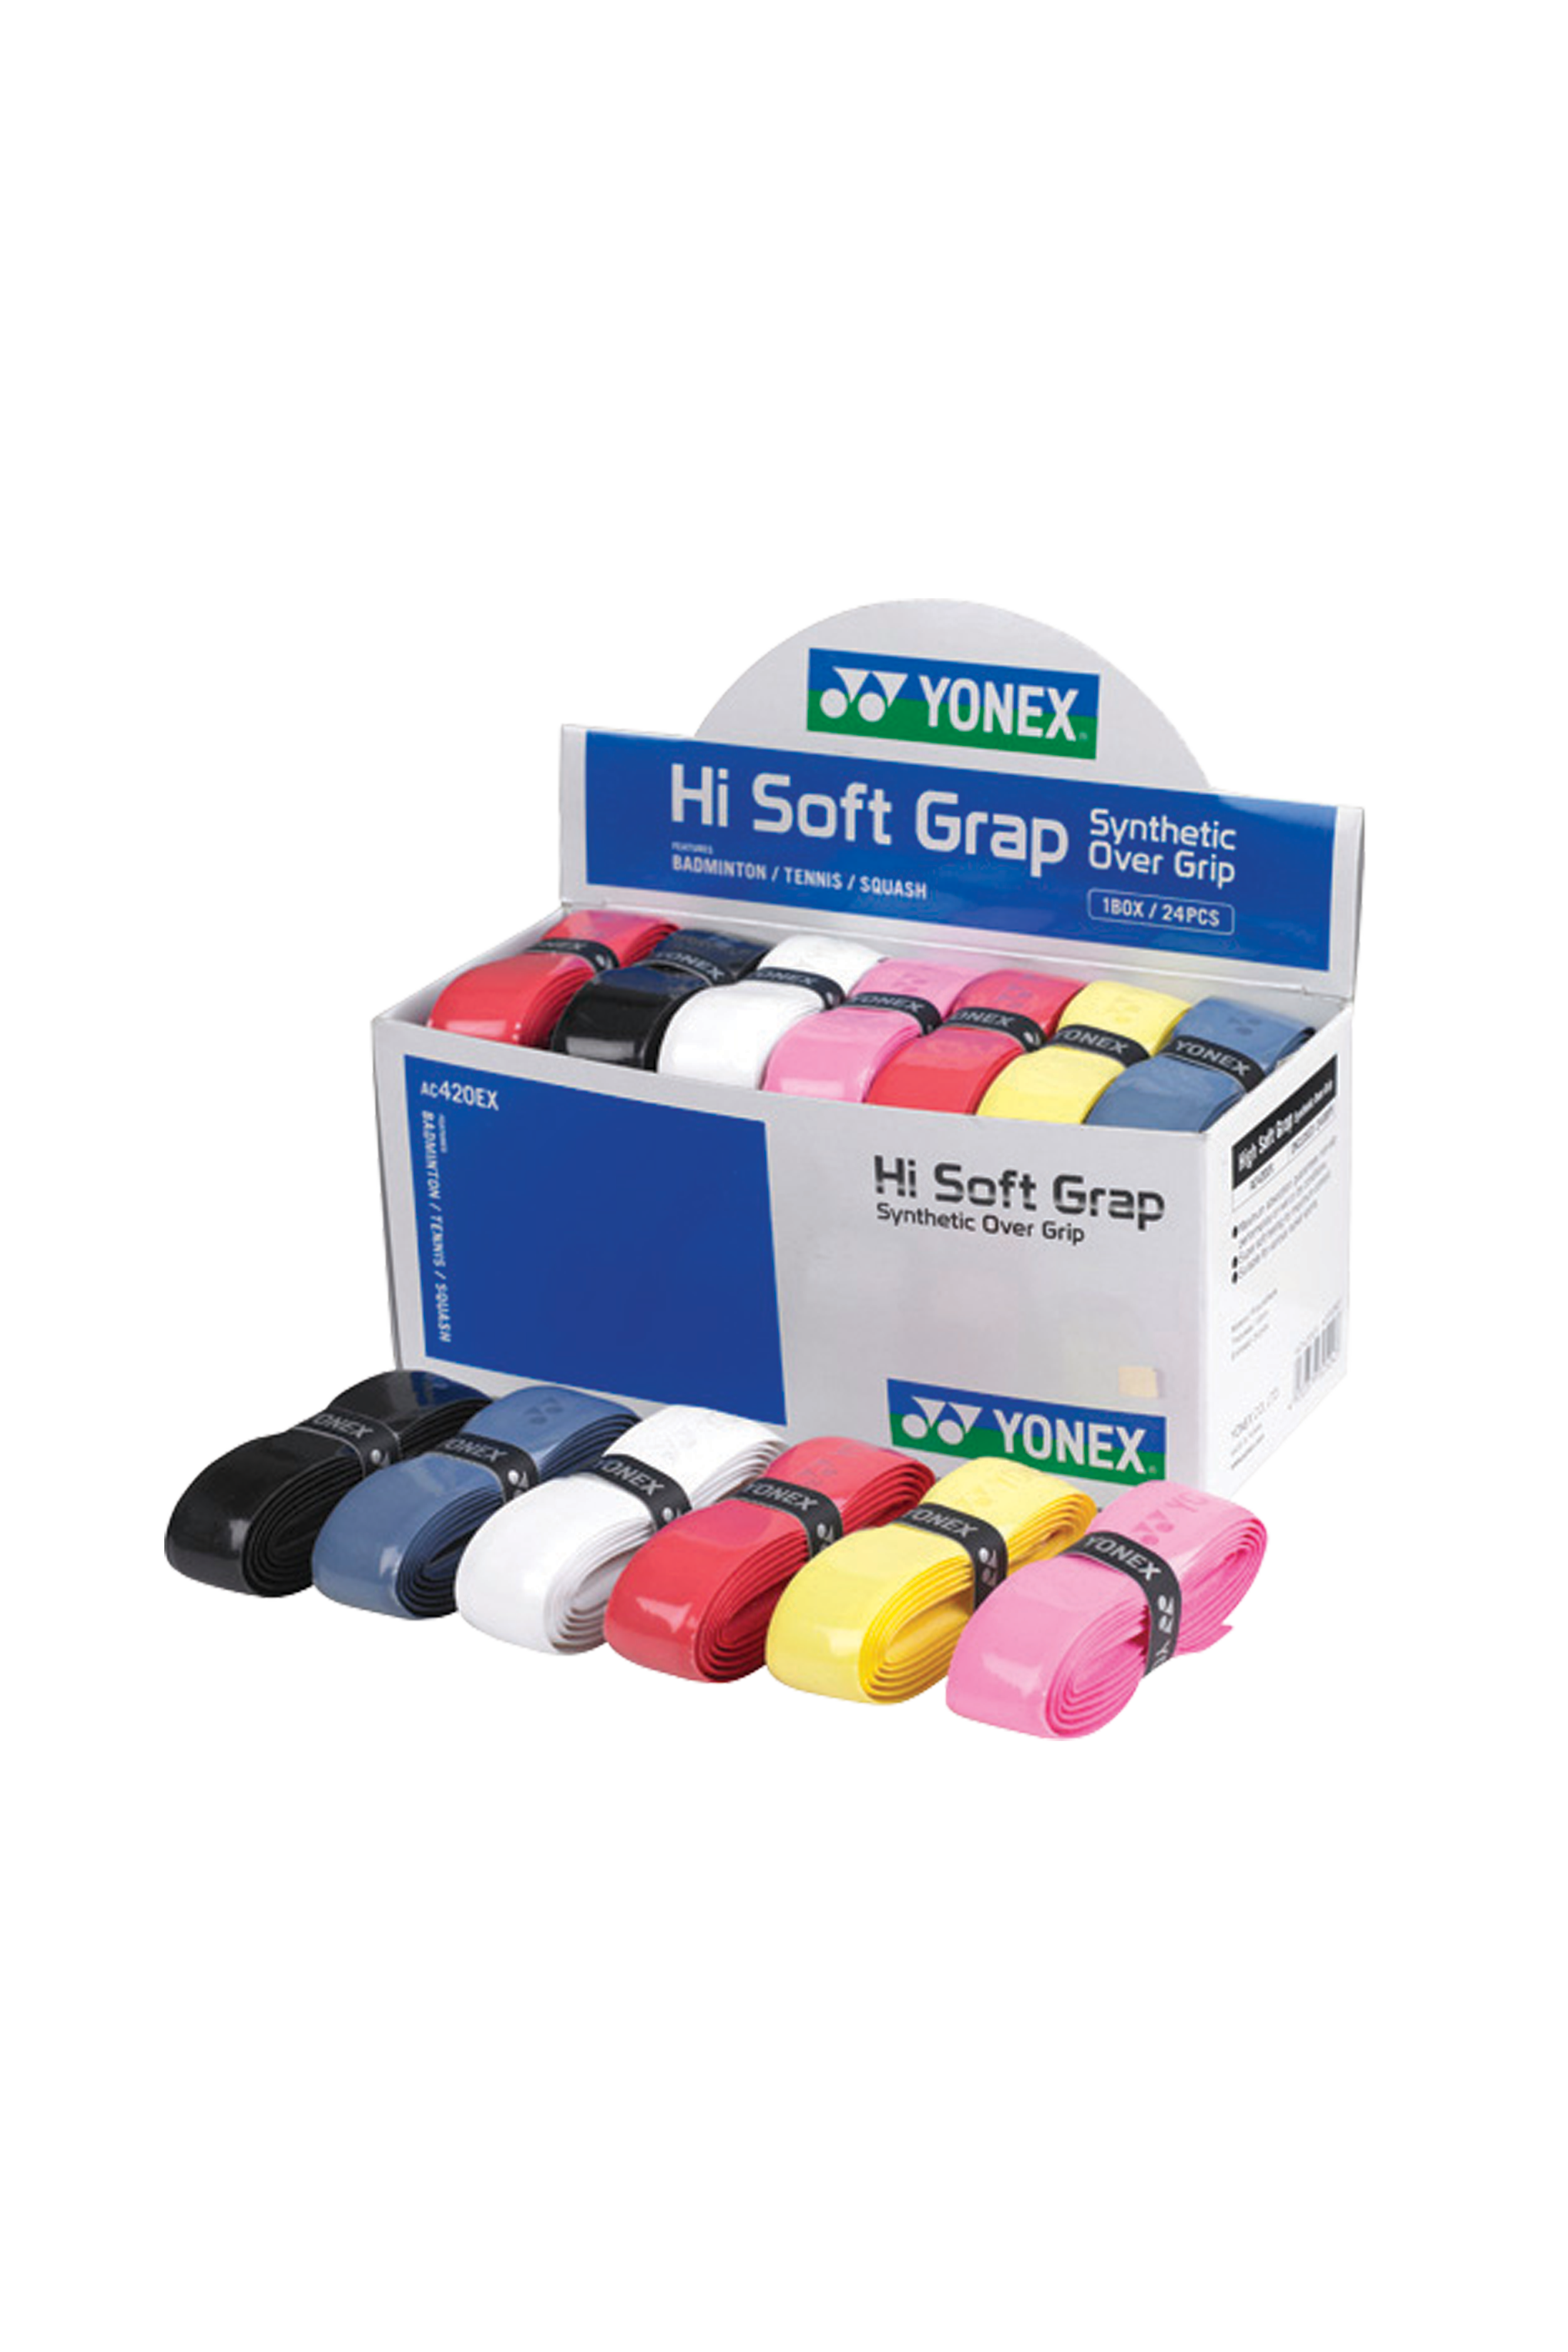 Yonex Hi Soft Grap ac420 Grip Tape 5 Piece Coloured-NEW 